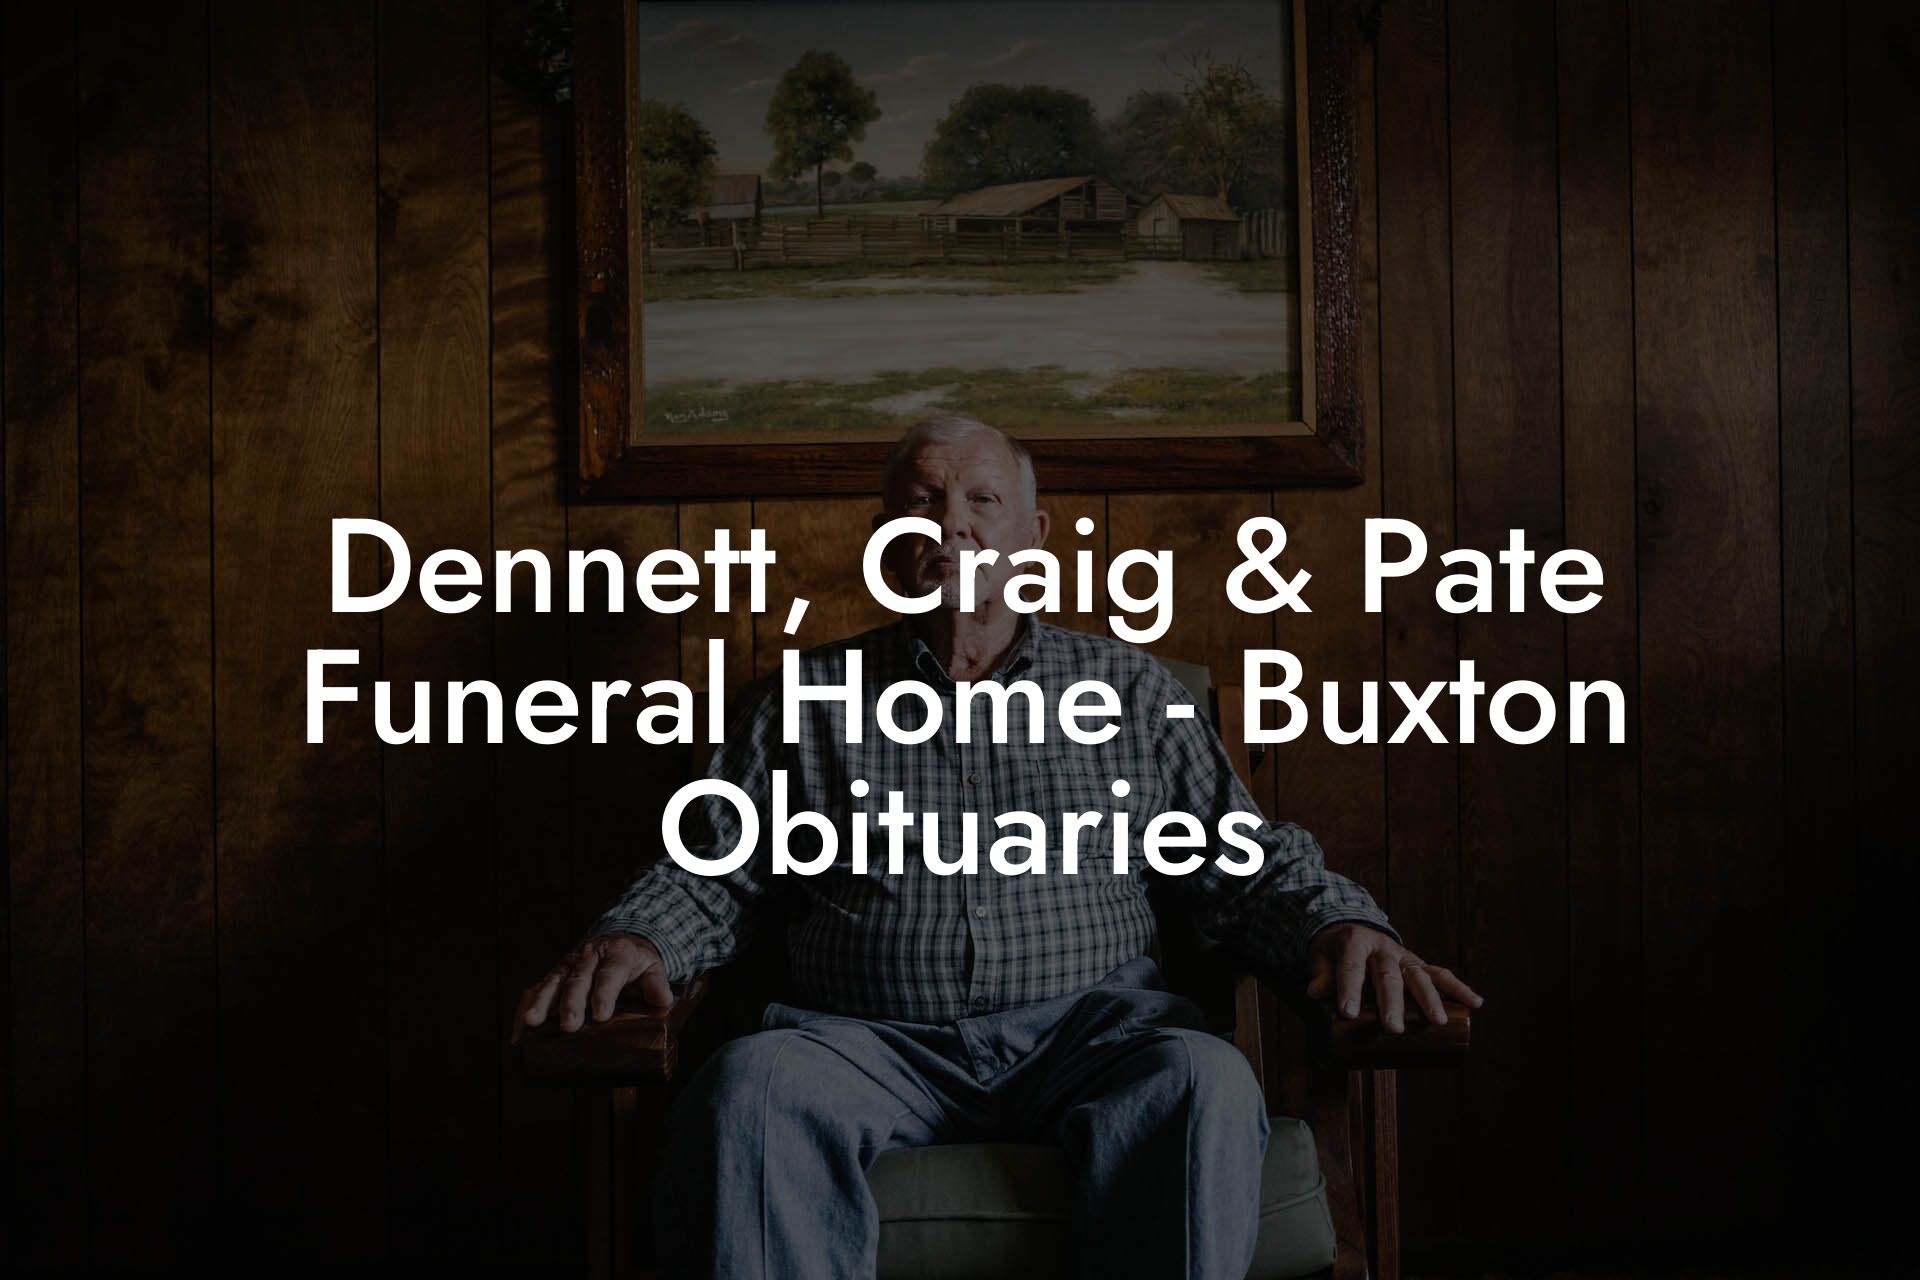 Dennett, Craig & Pate Funeral Home - Buxton Obituaries